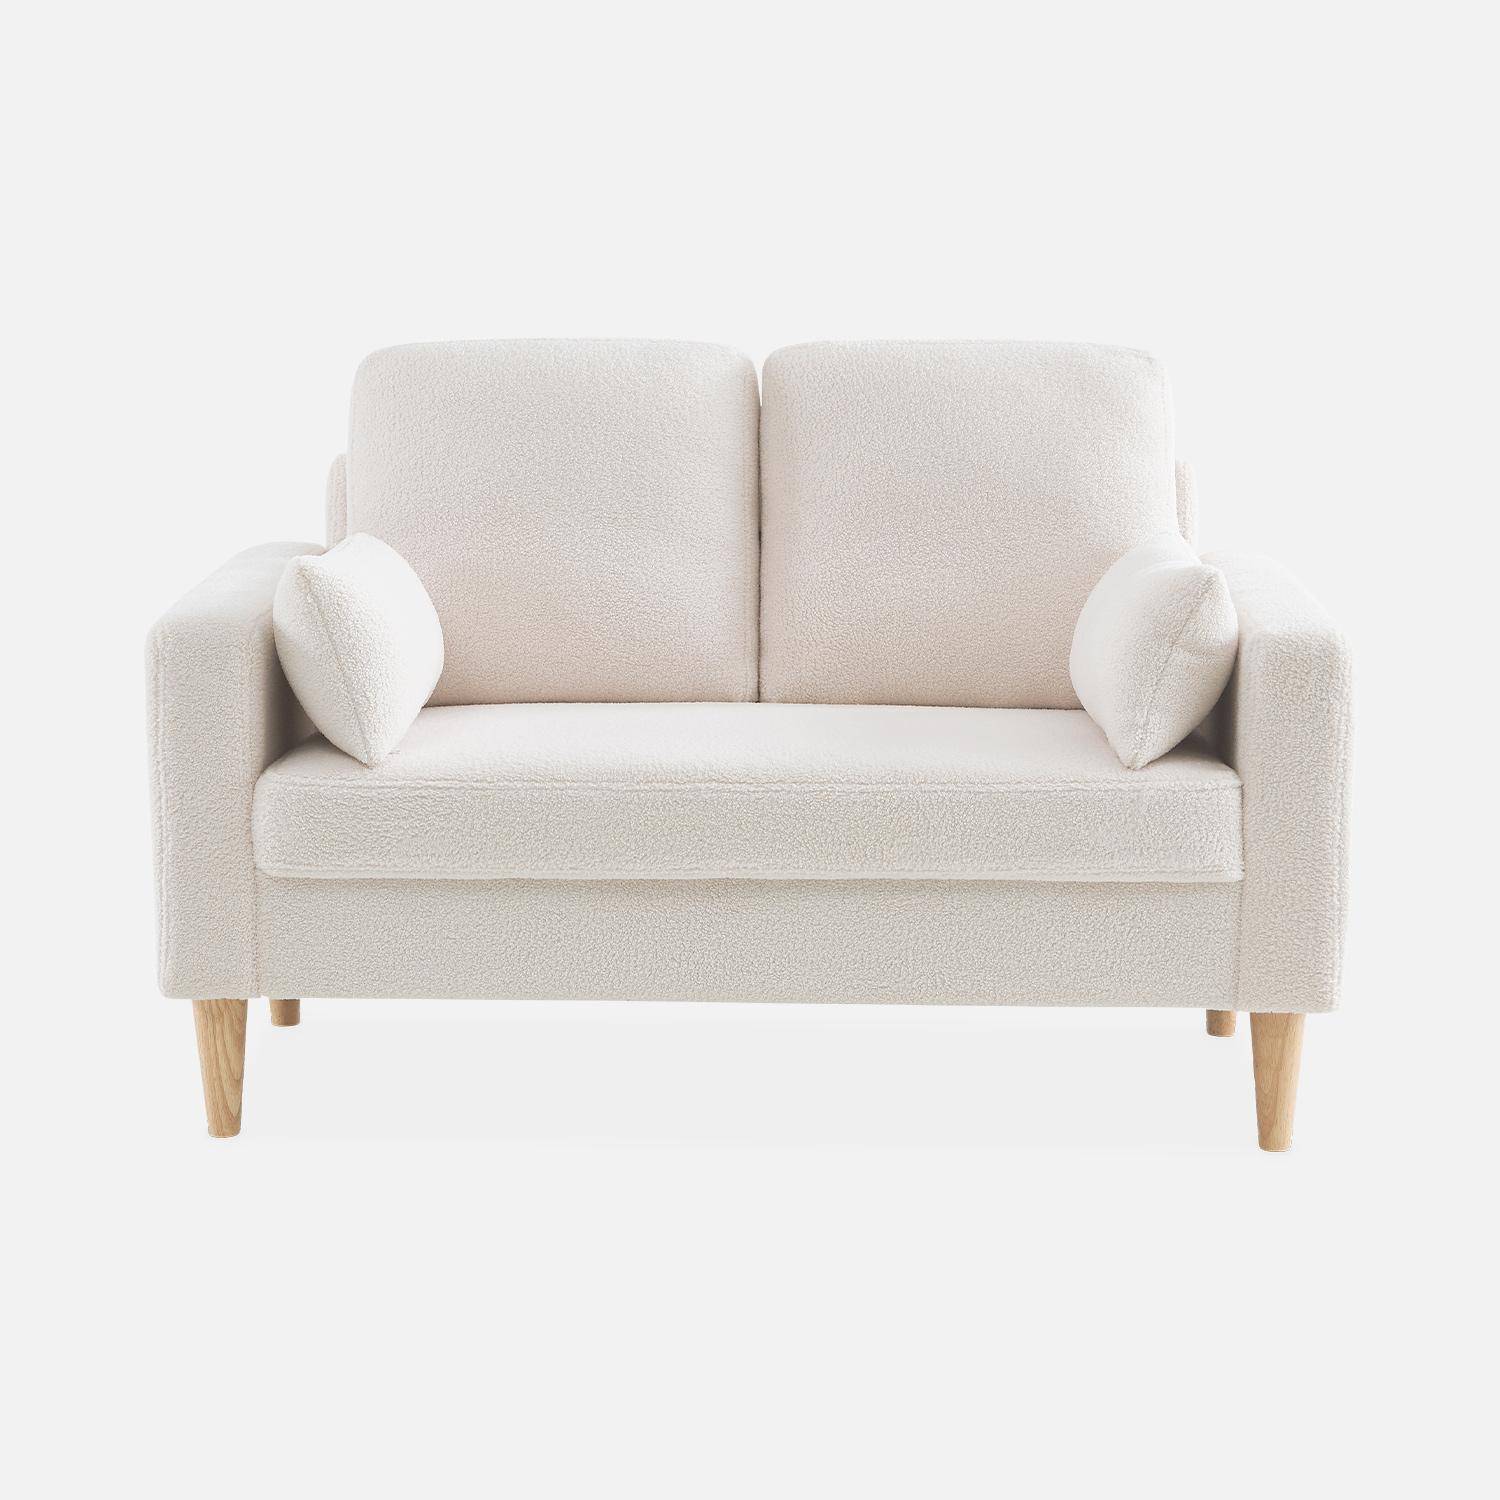 Sofá con rizos blancos, sofá recto de 2 plazas con patas de madera, estilo escandinavo   Photo4